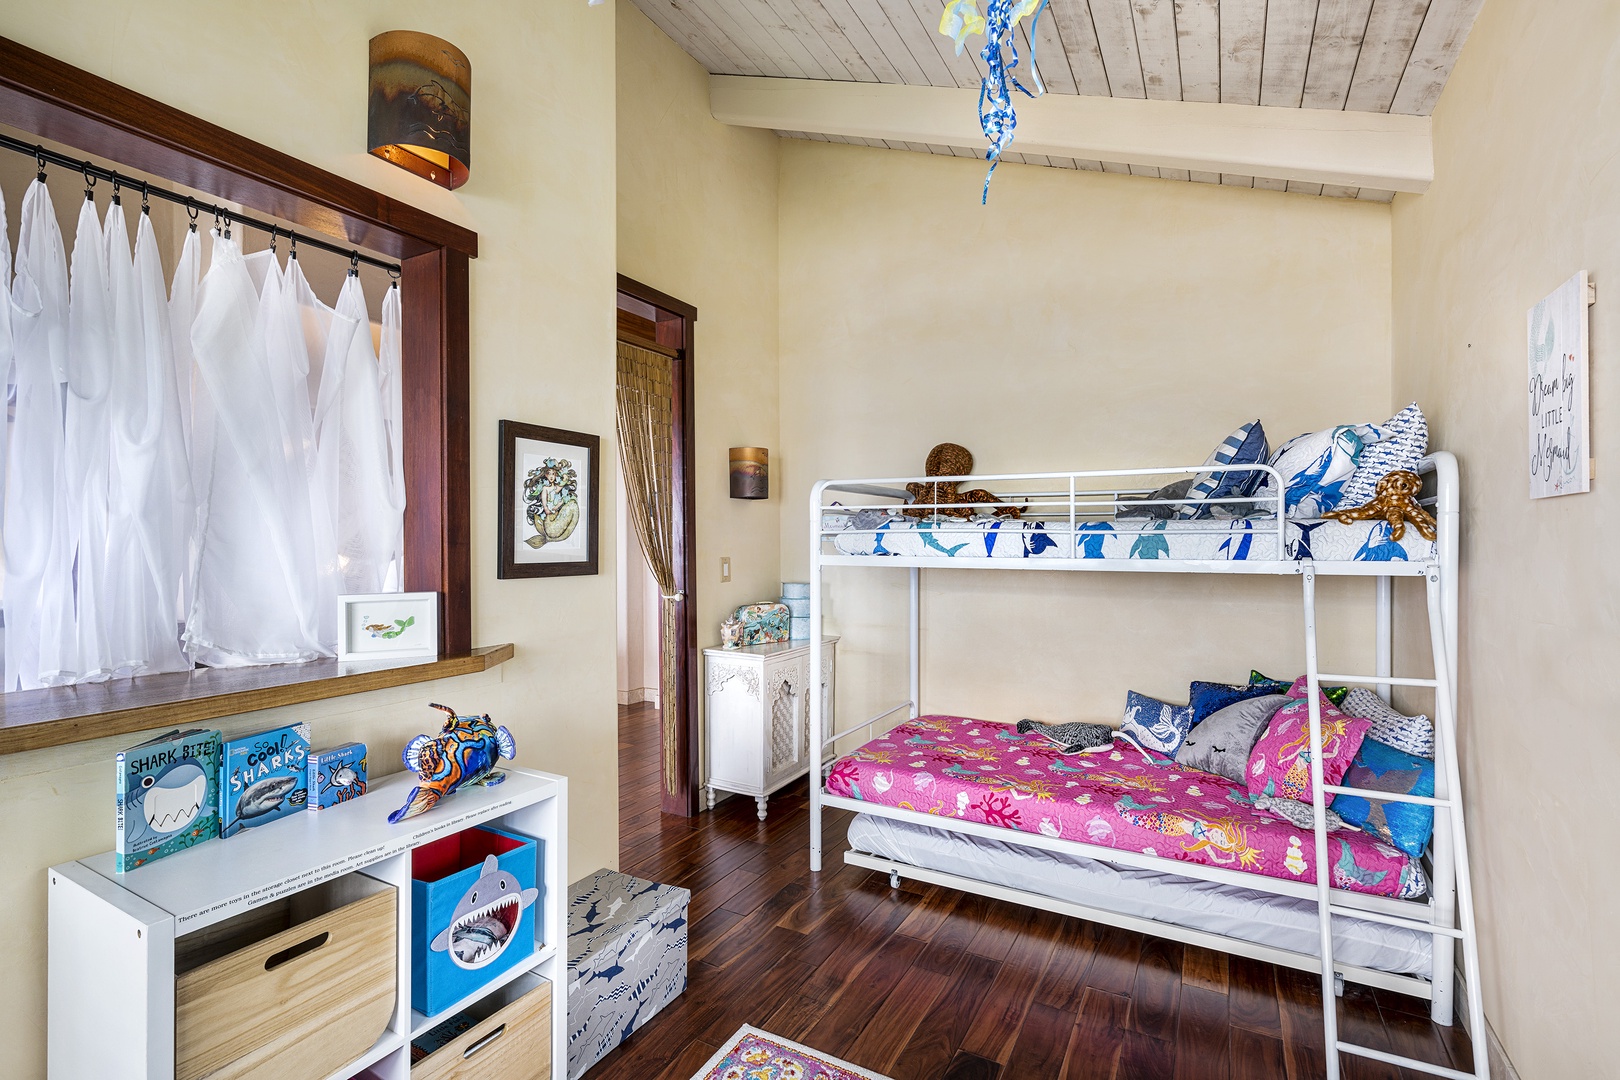 Kailua Kona Vacation Rentals, Mermaid Cove - Kids sleep/play room off the Primary bedroom